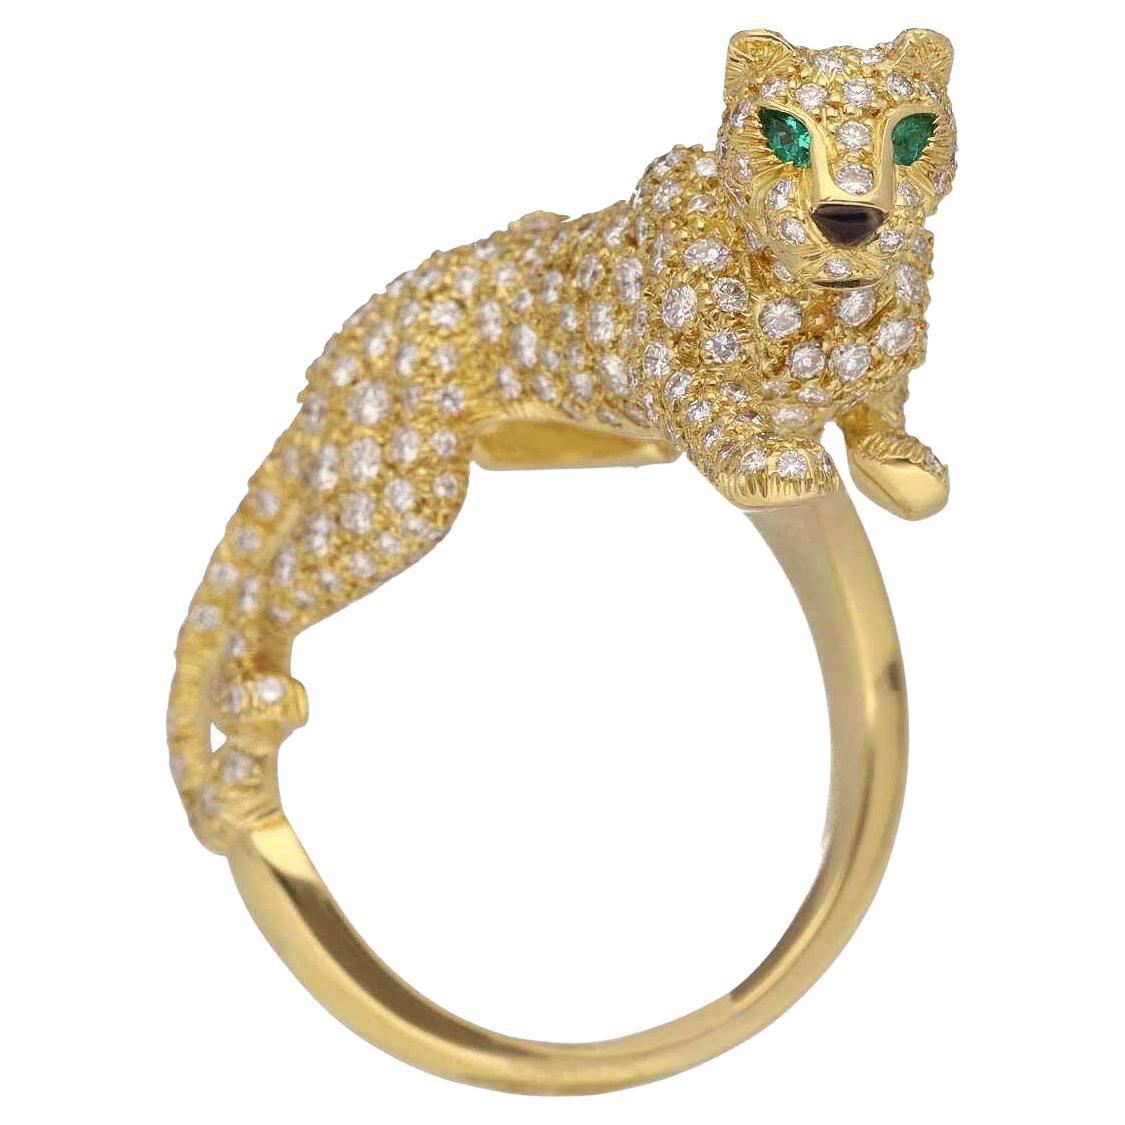 Cartier Panthere Sookie Ring Diamond Emerald Onyx 18 Karat Yellow Gold US Size 7